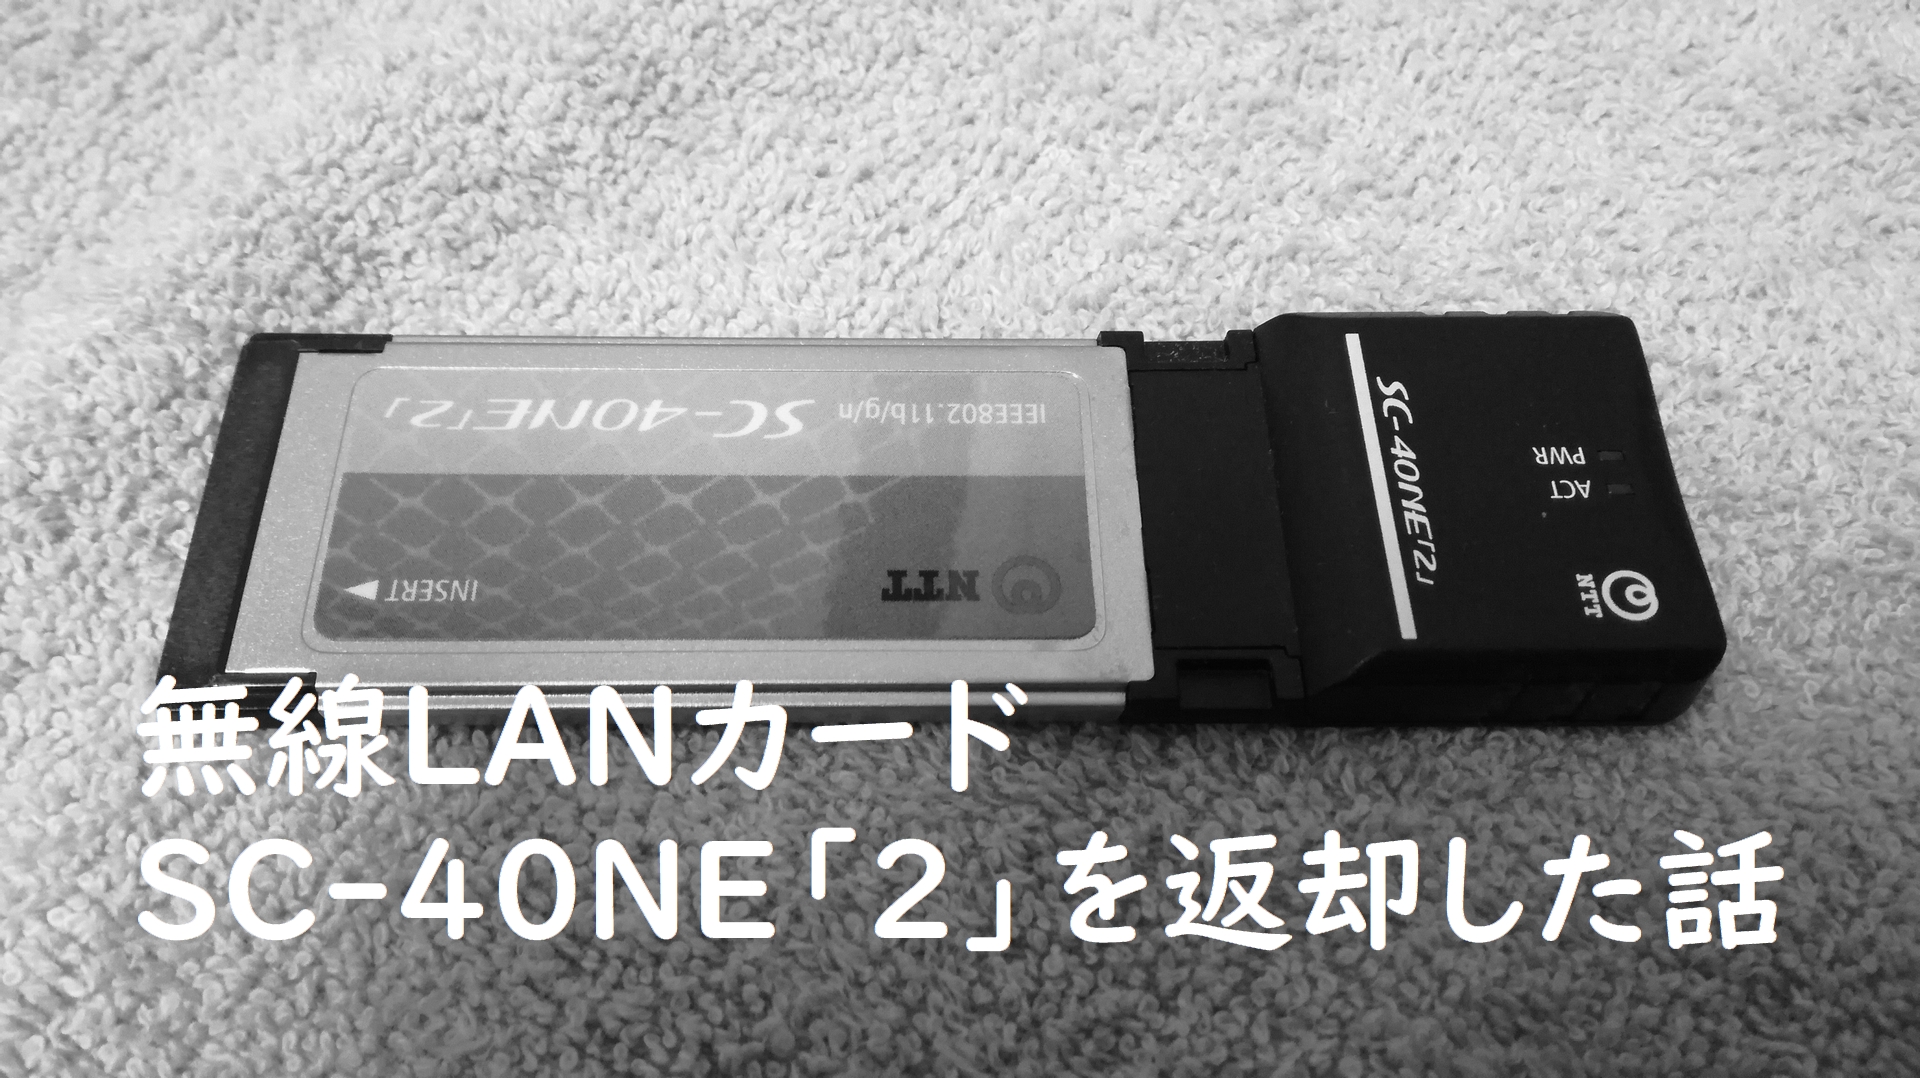 A NTT 東日本 西日本 SC-40NE「2」無線 LANカード - PCパーツ